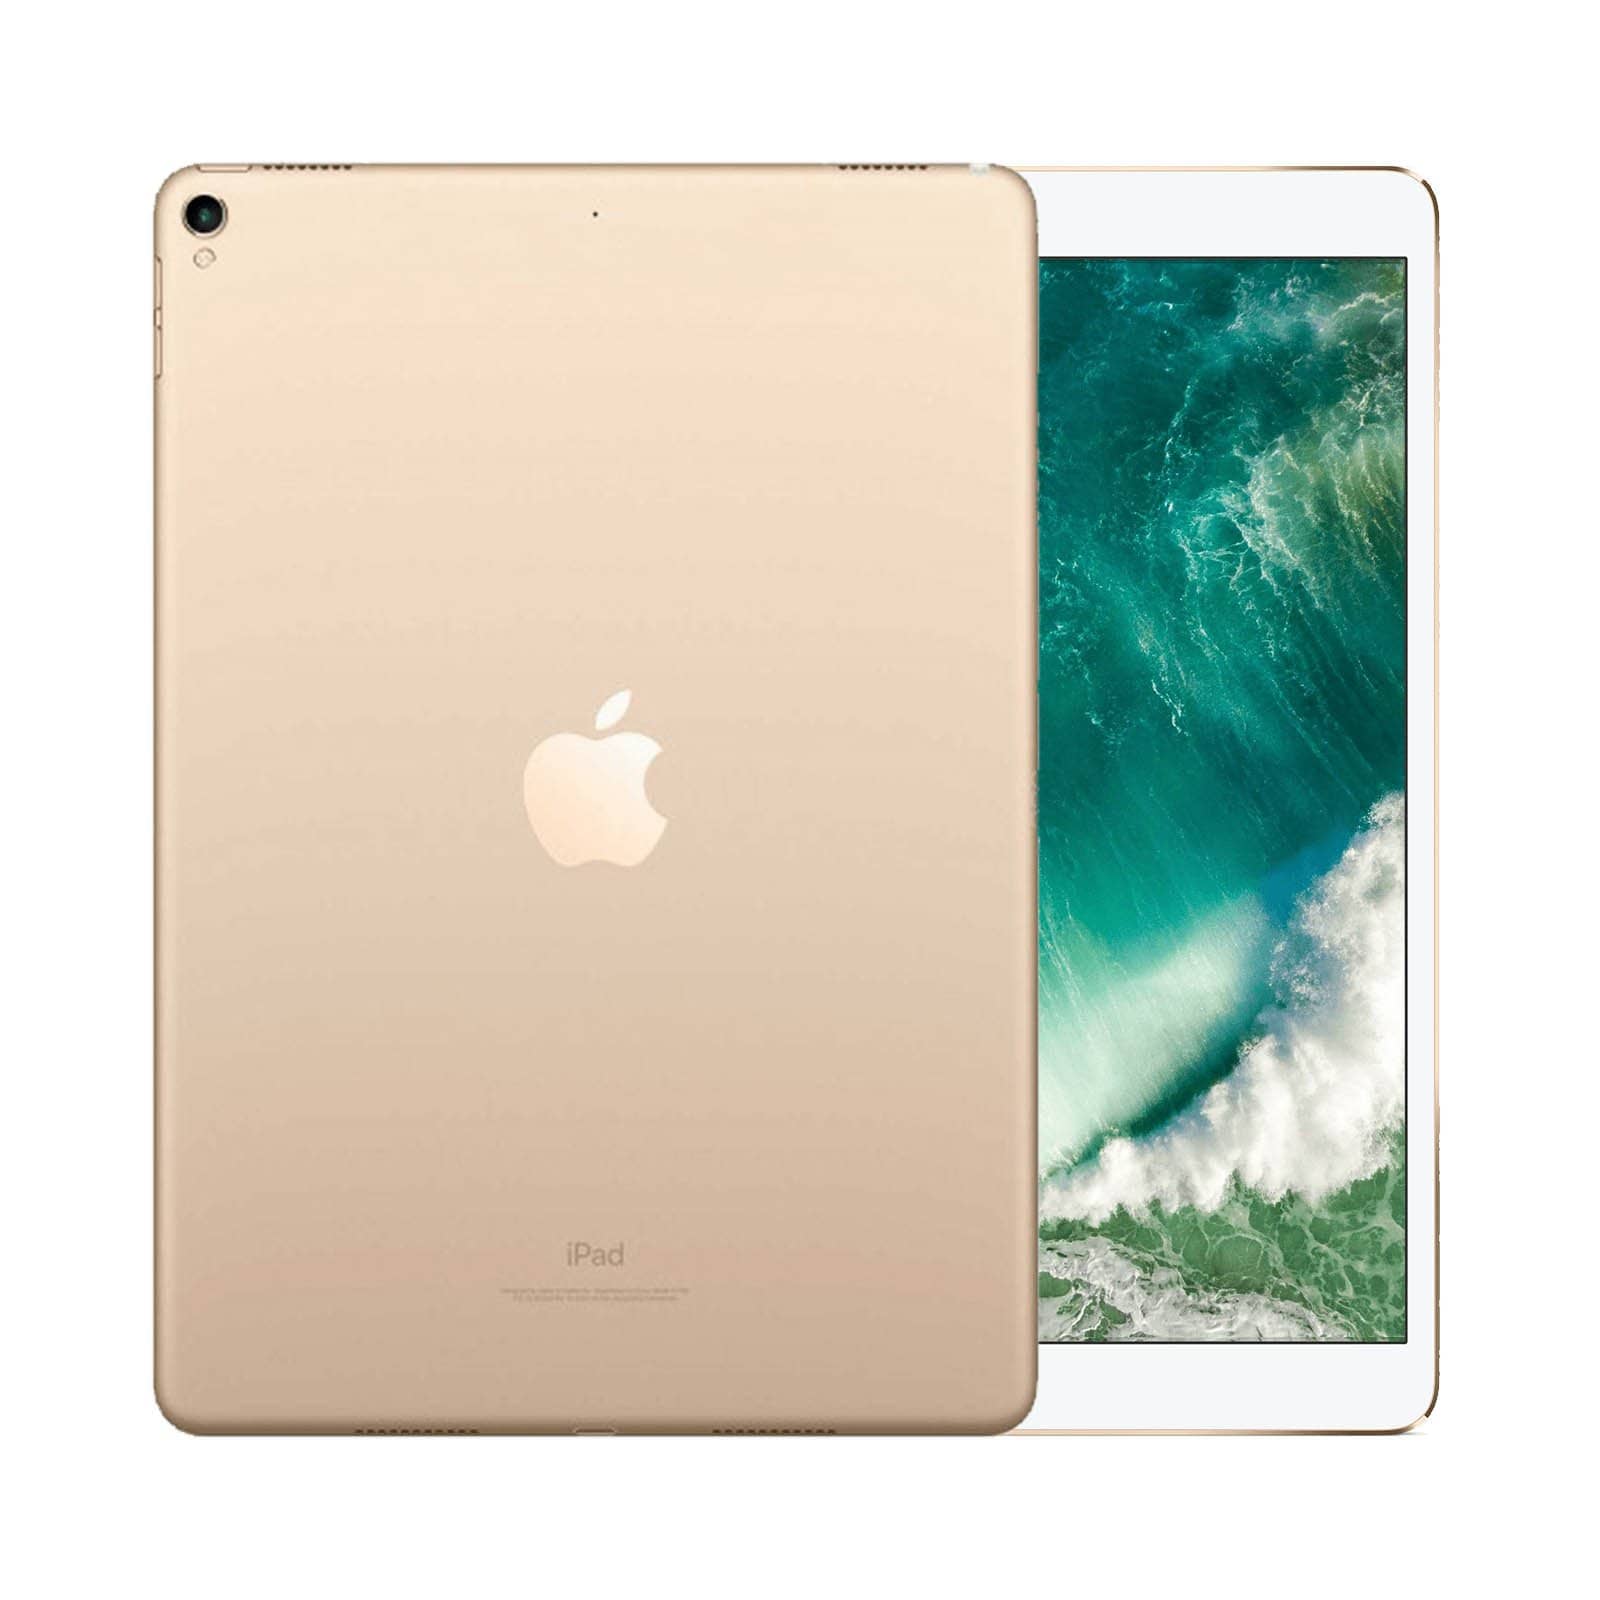 iPad Pro 10.5 Inch 512GB Gold Good - WiFi 512GB Gold Good